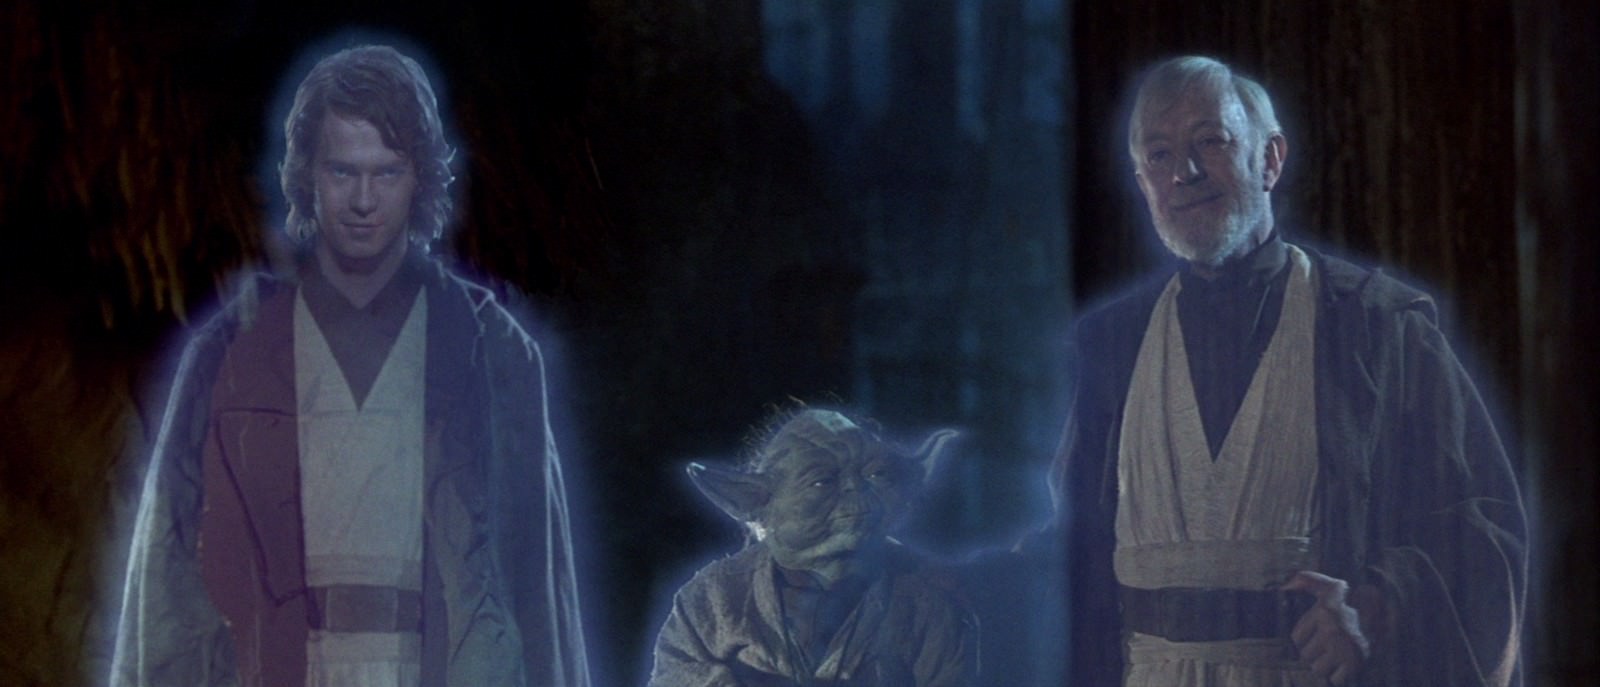 Movie, Star Wars Episode VI: Return of the Jedi(美國, 1983) / 星際大戰六部曲：絕地大反攻(台灣) / 星球大战VI：绝地归来(中國) / 星球大戰：武士復仇(香港), 電影劇照